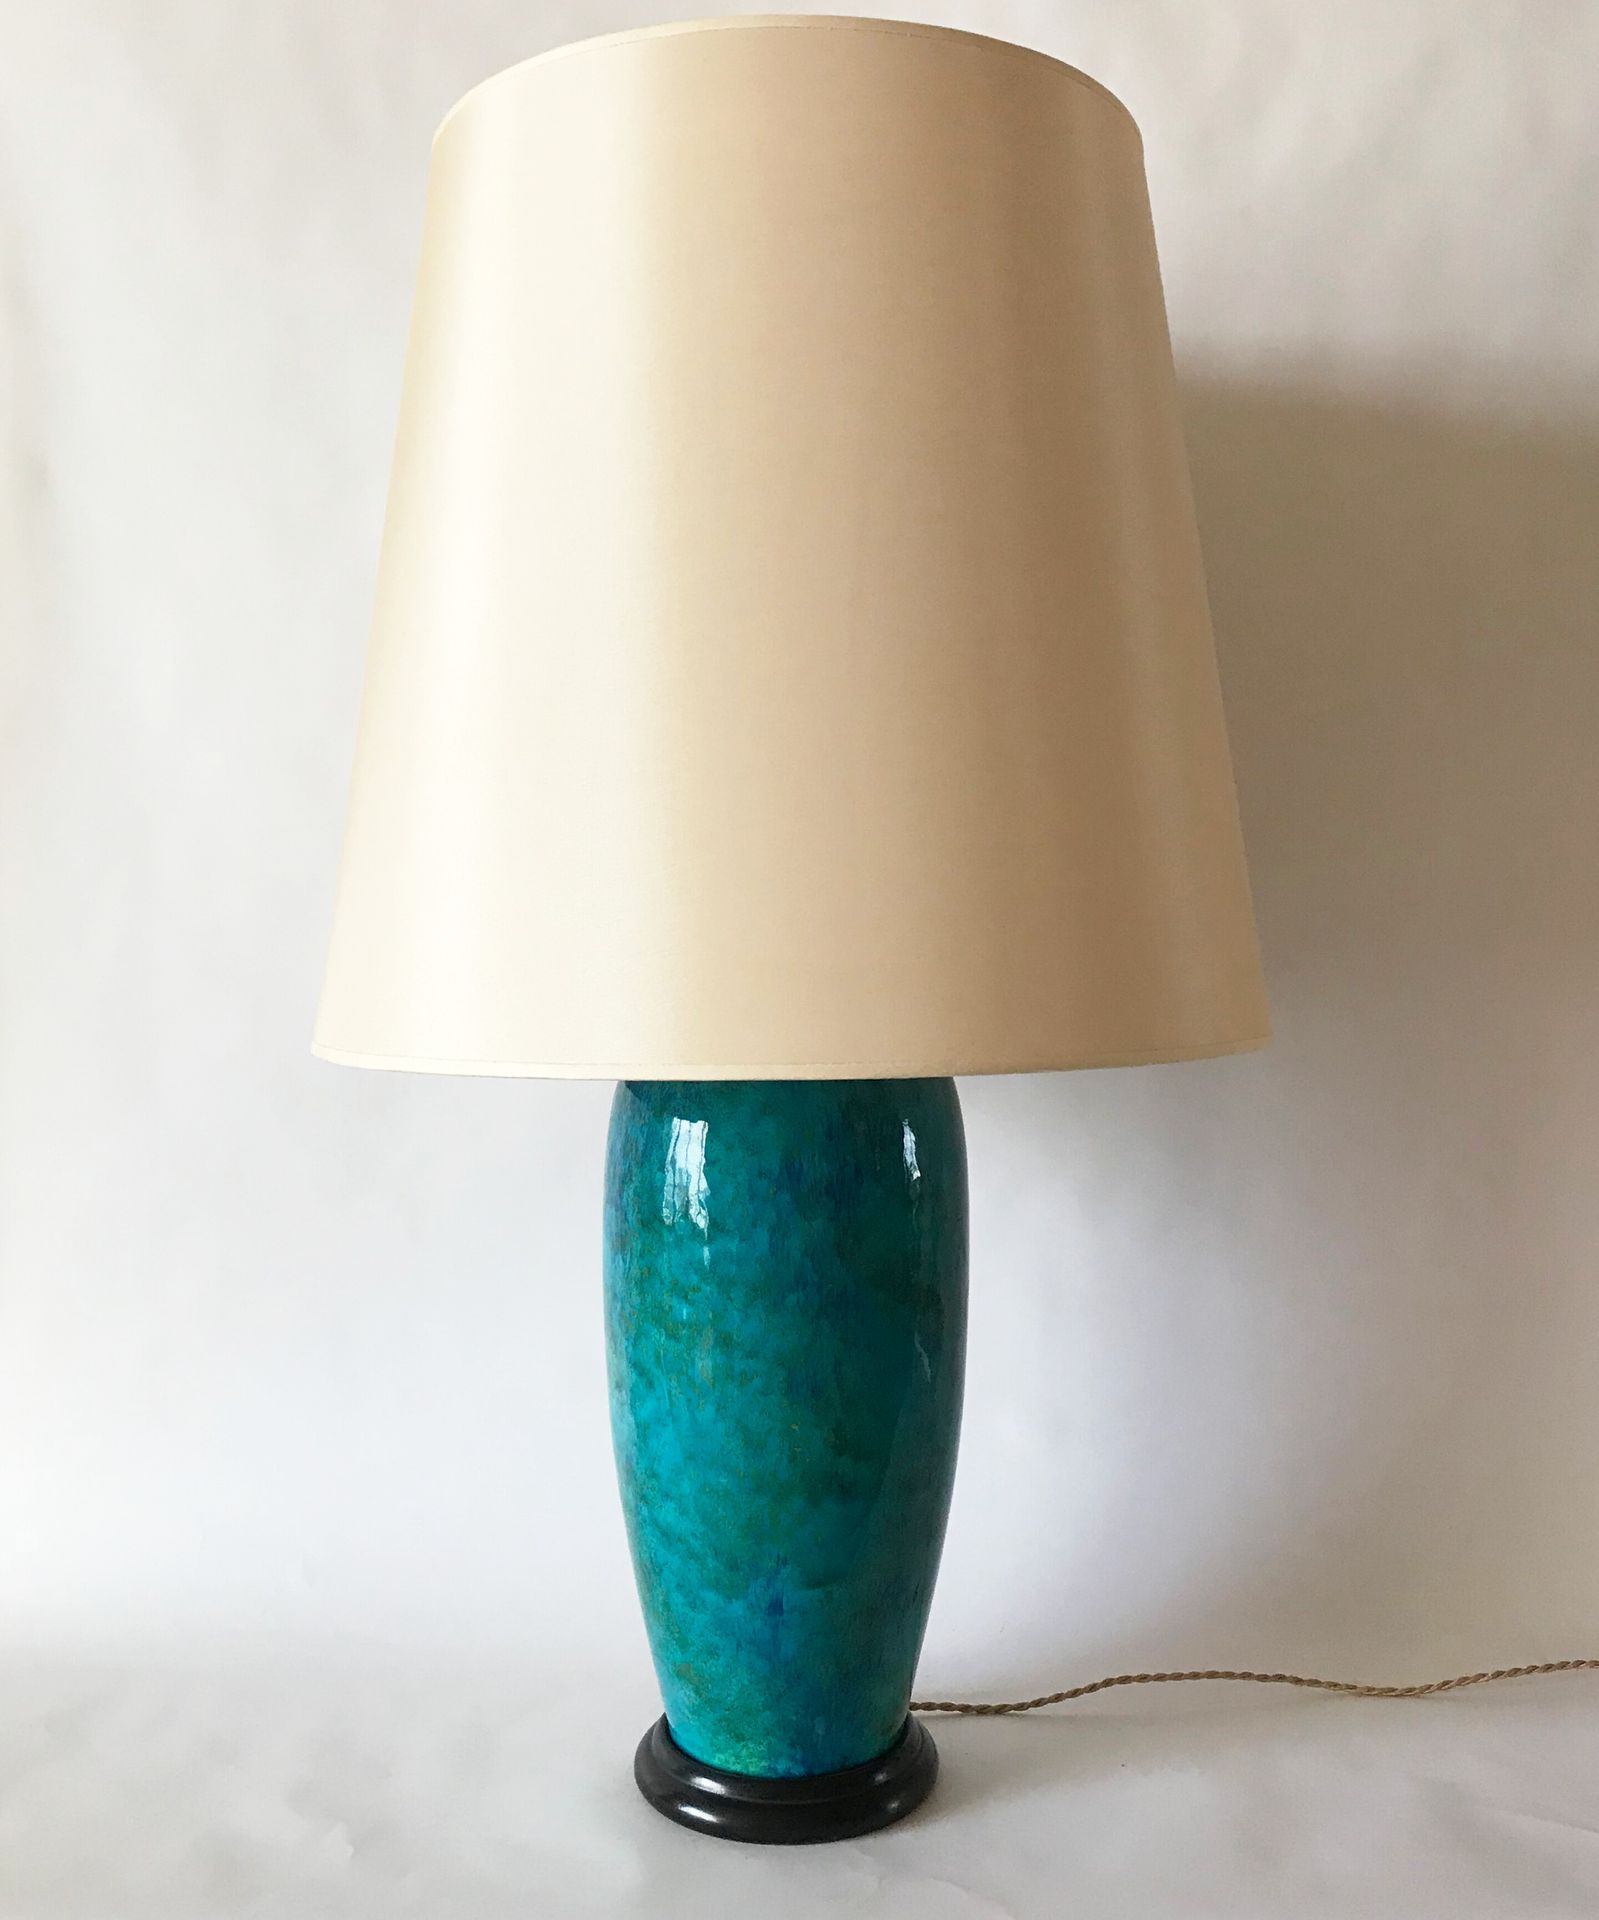 CHINE 中国

粉蓝色釉面陶瓷卵形花瓶

安装为灯

木质底座

H.35厘米